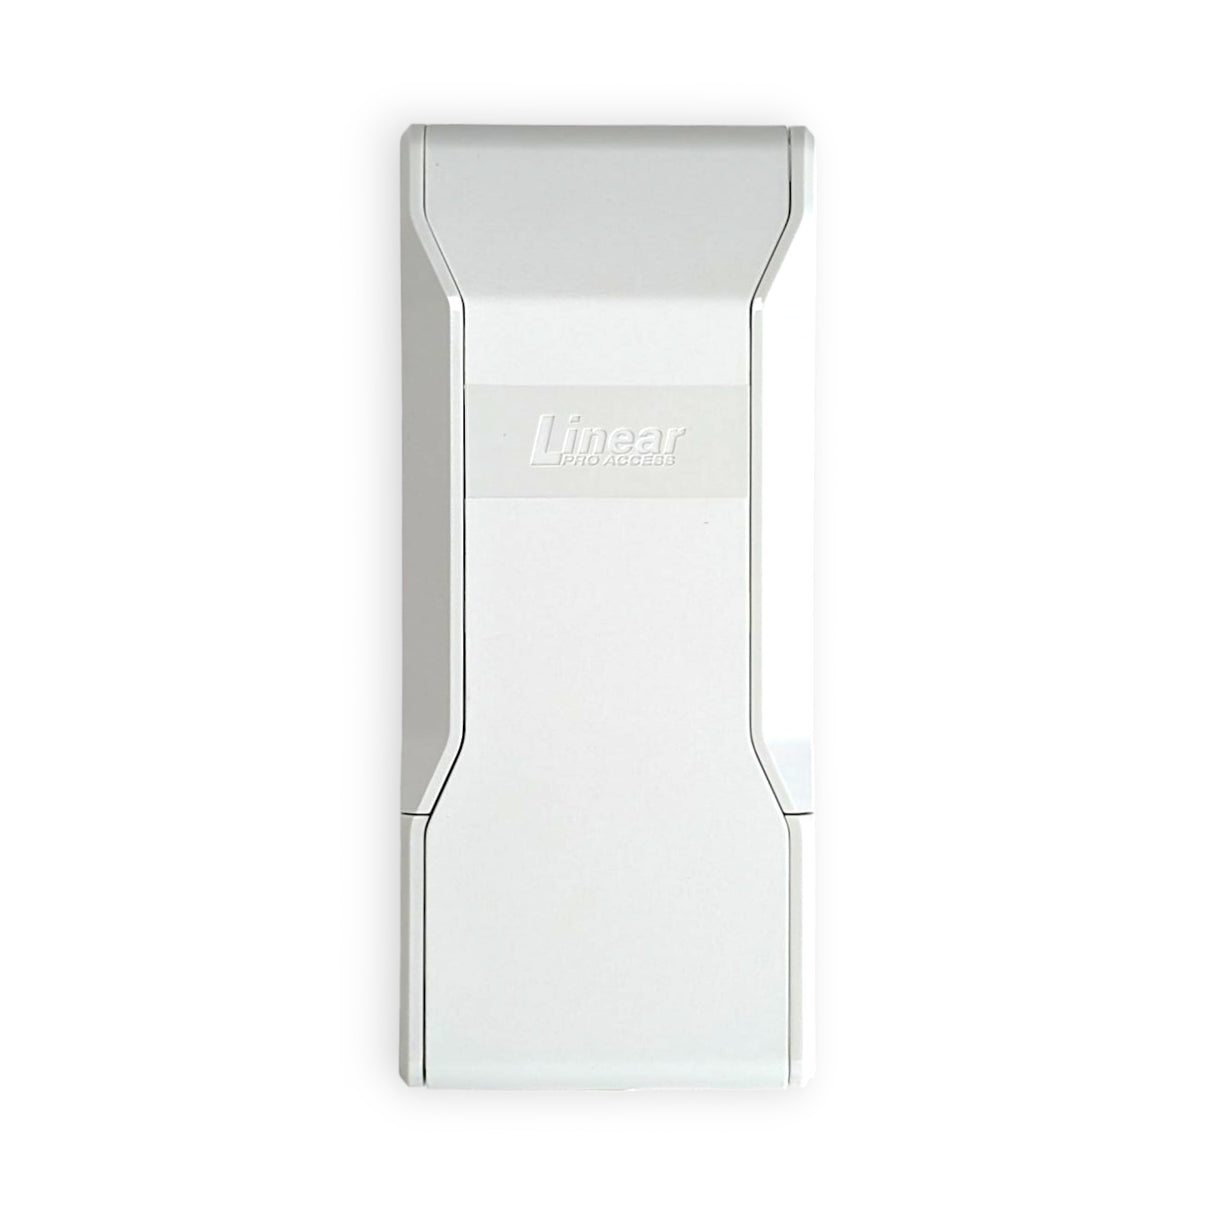 Wireless Linear Keypad LPWKP Cover closed